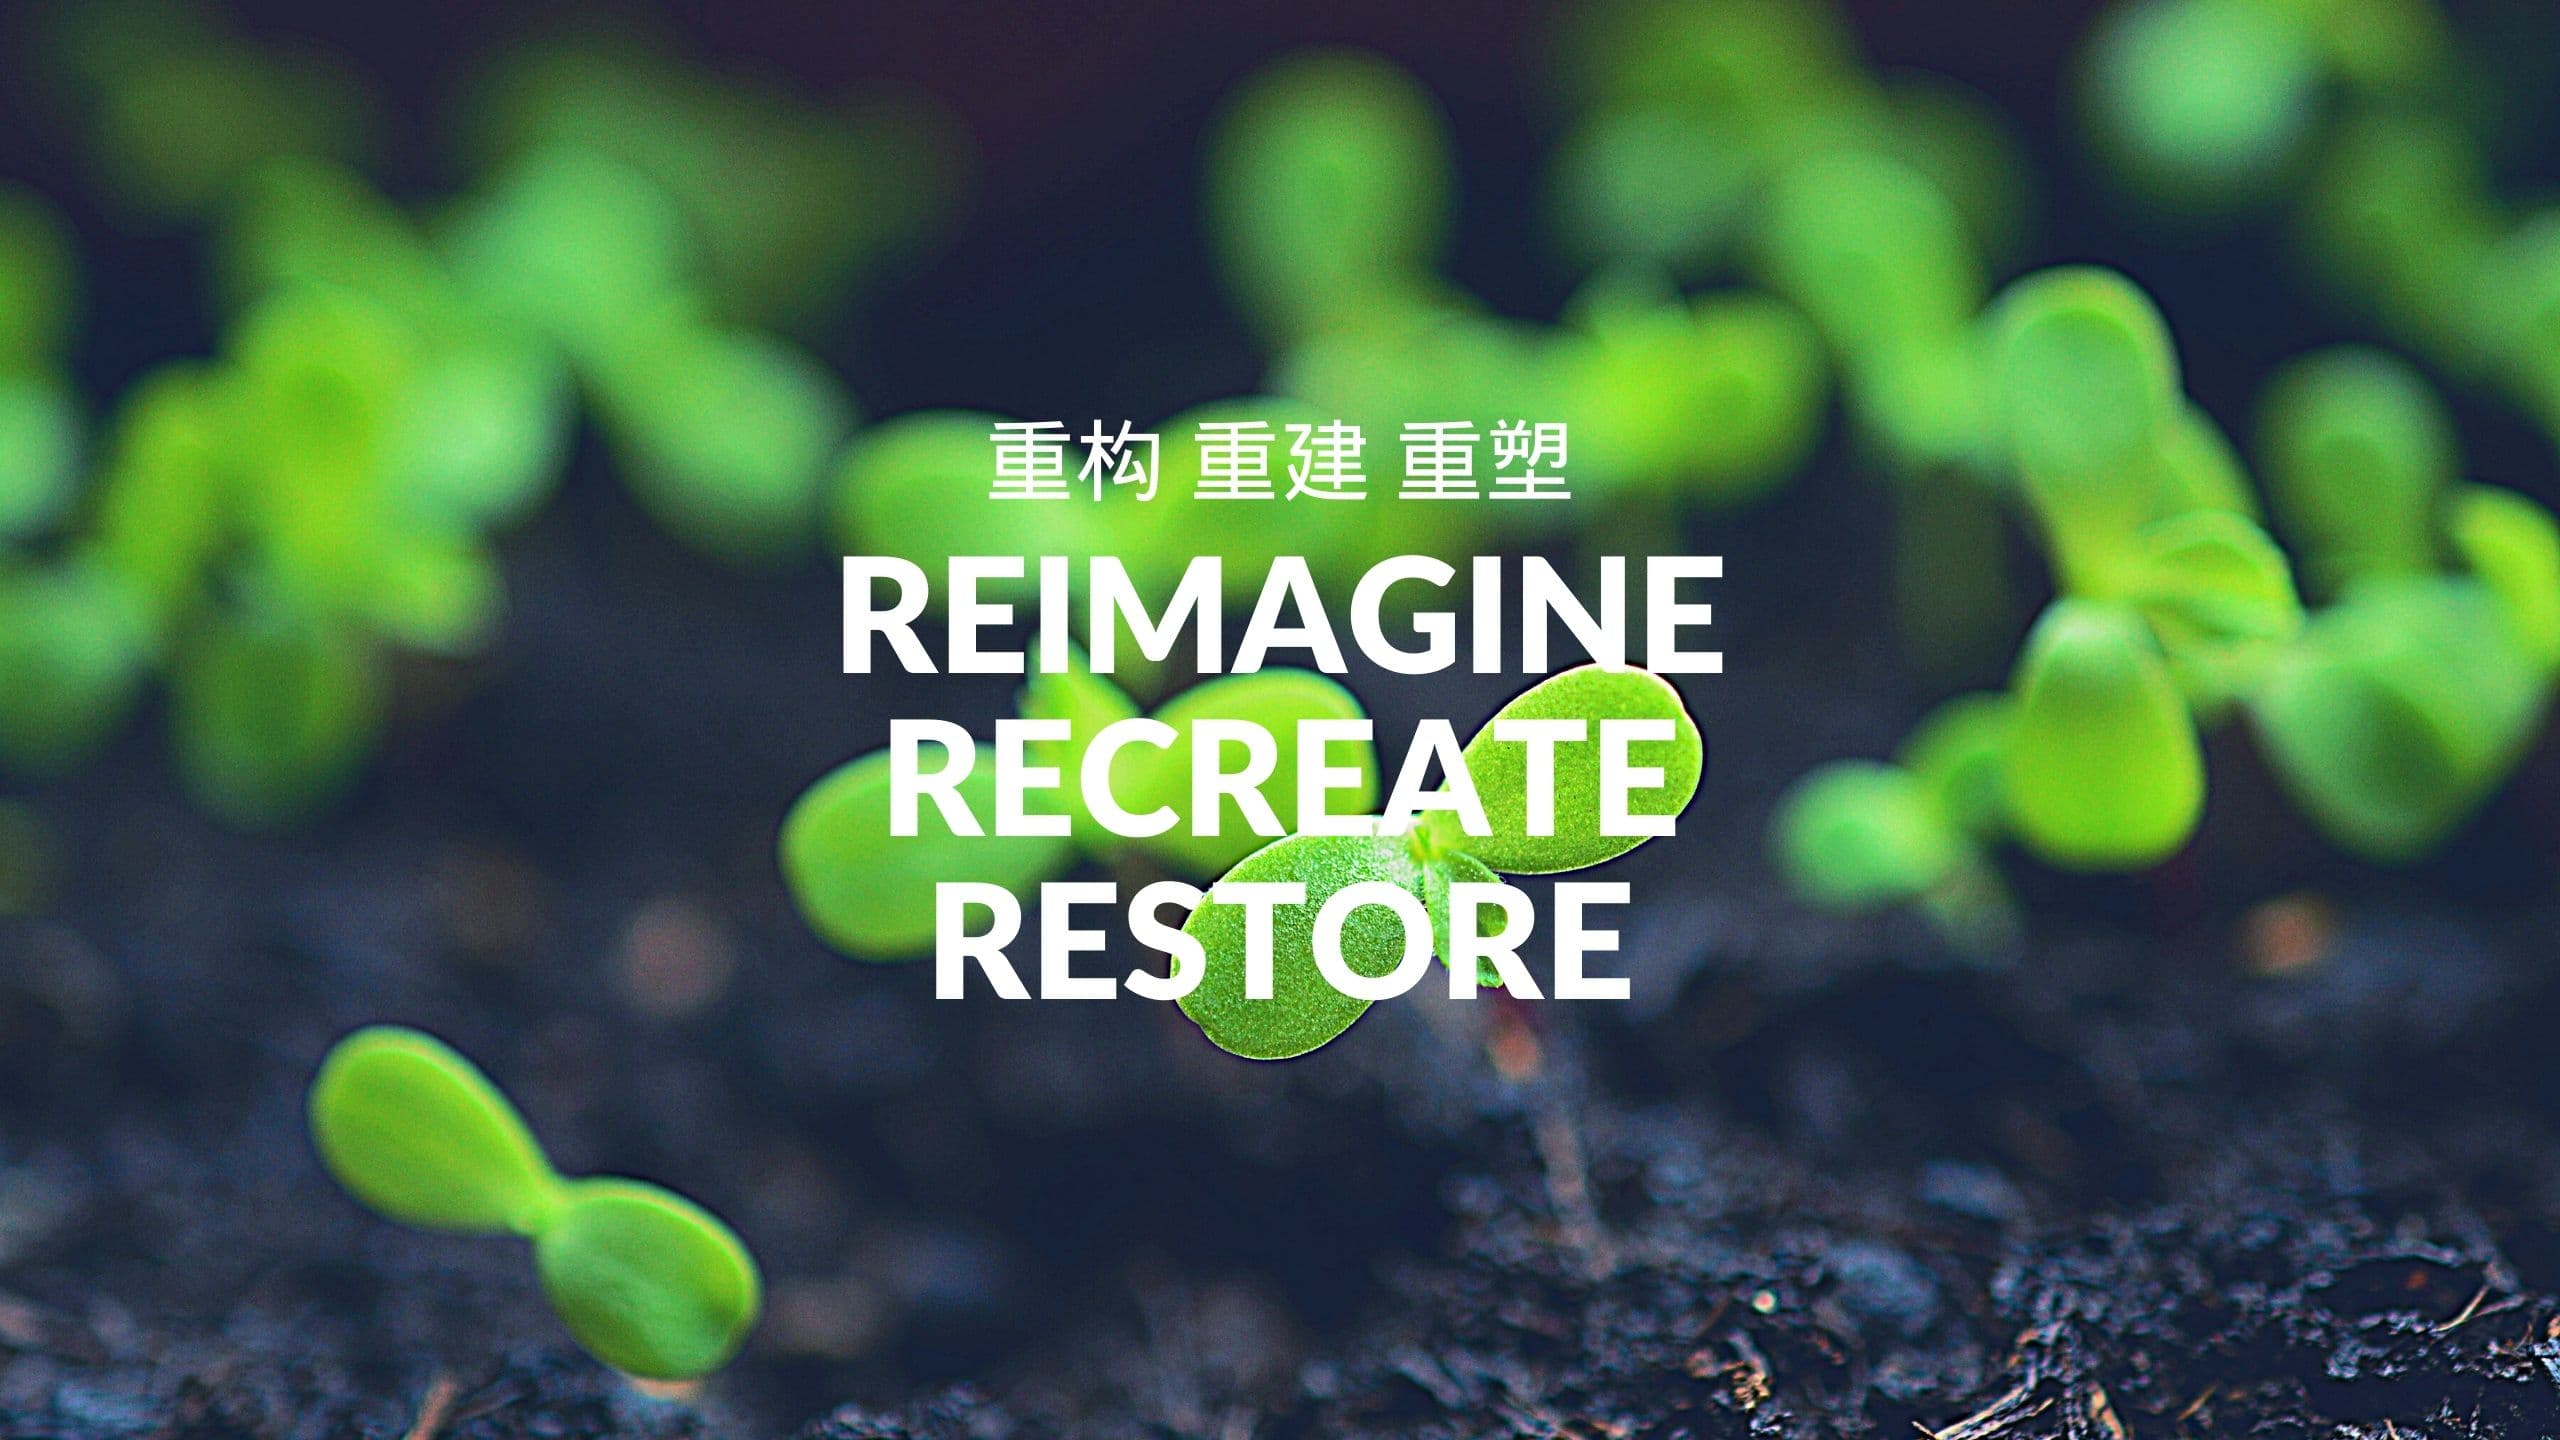 2021 World Environment Day: Reimagine Recreate Restore